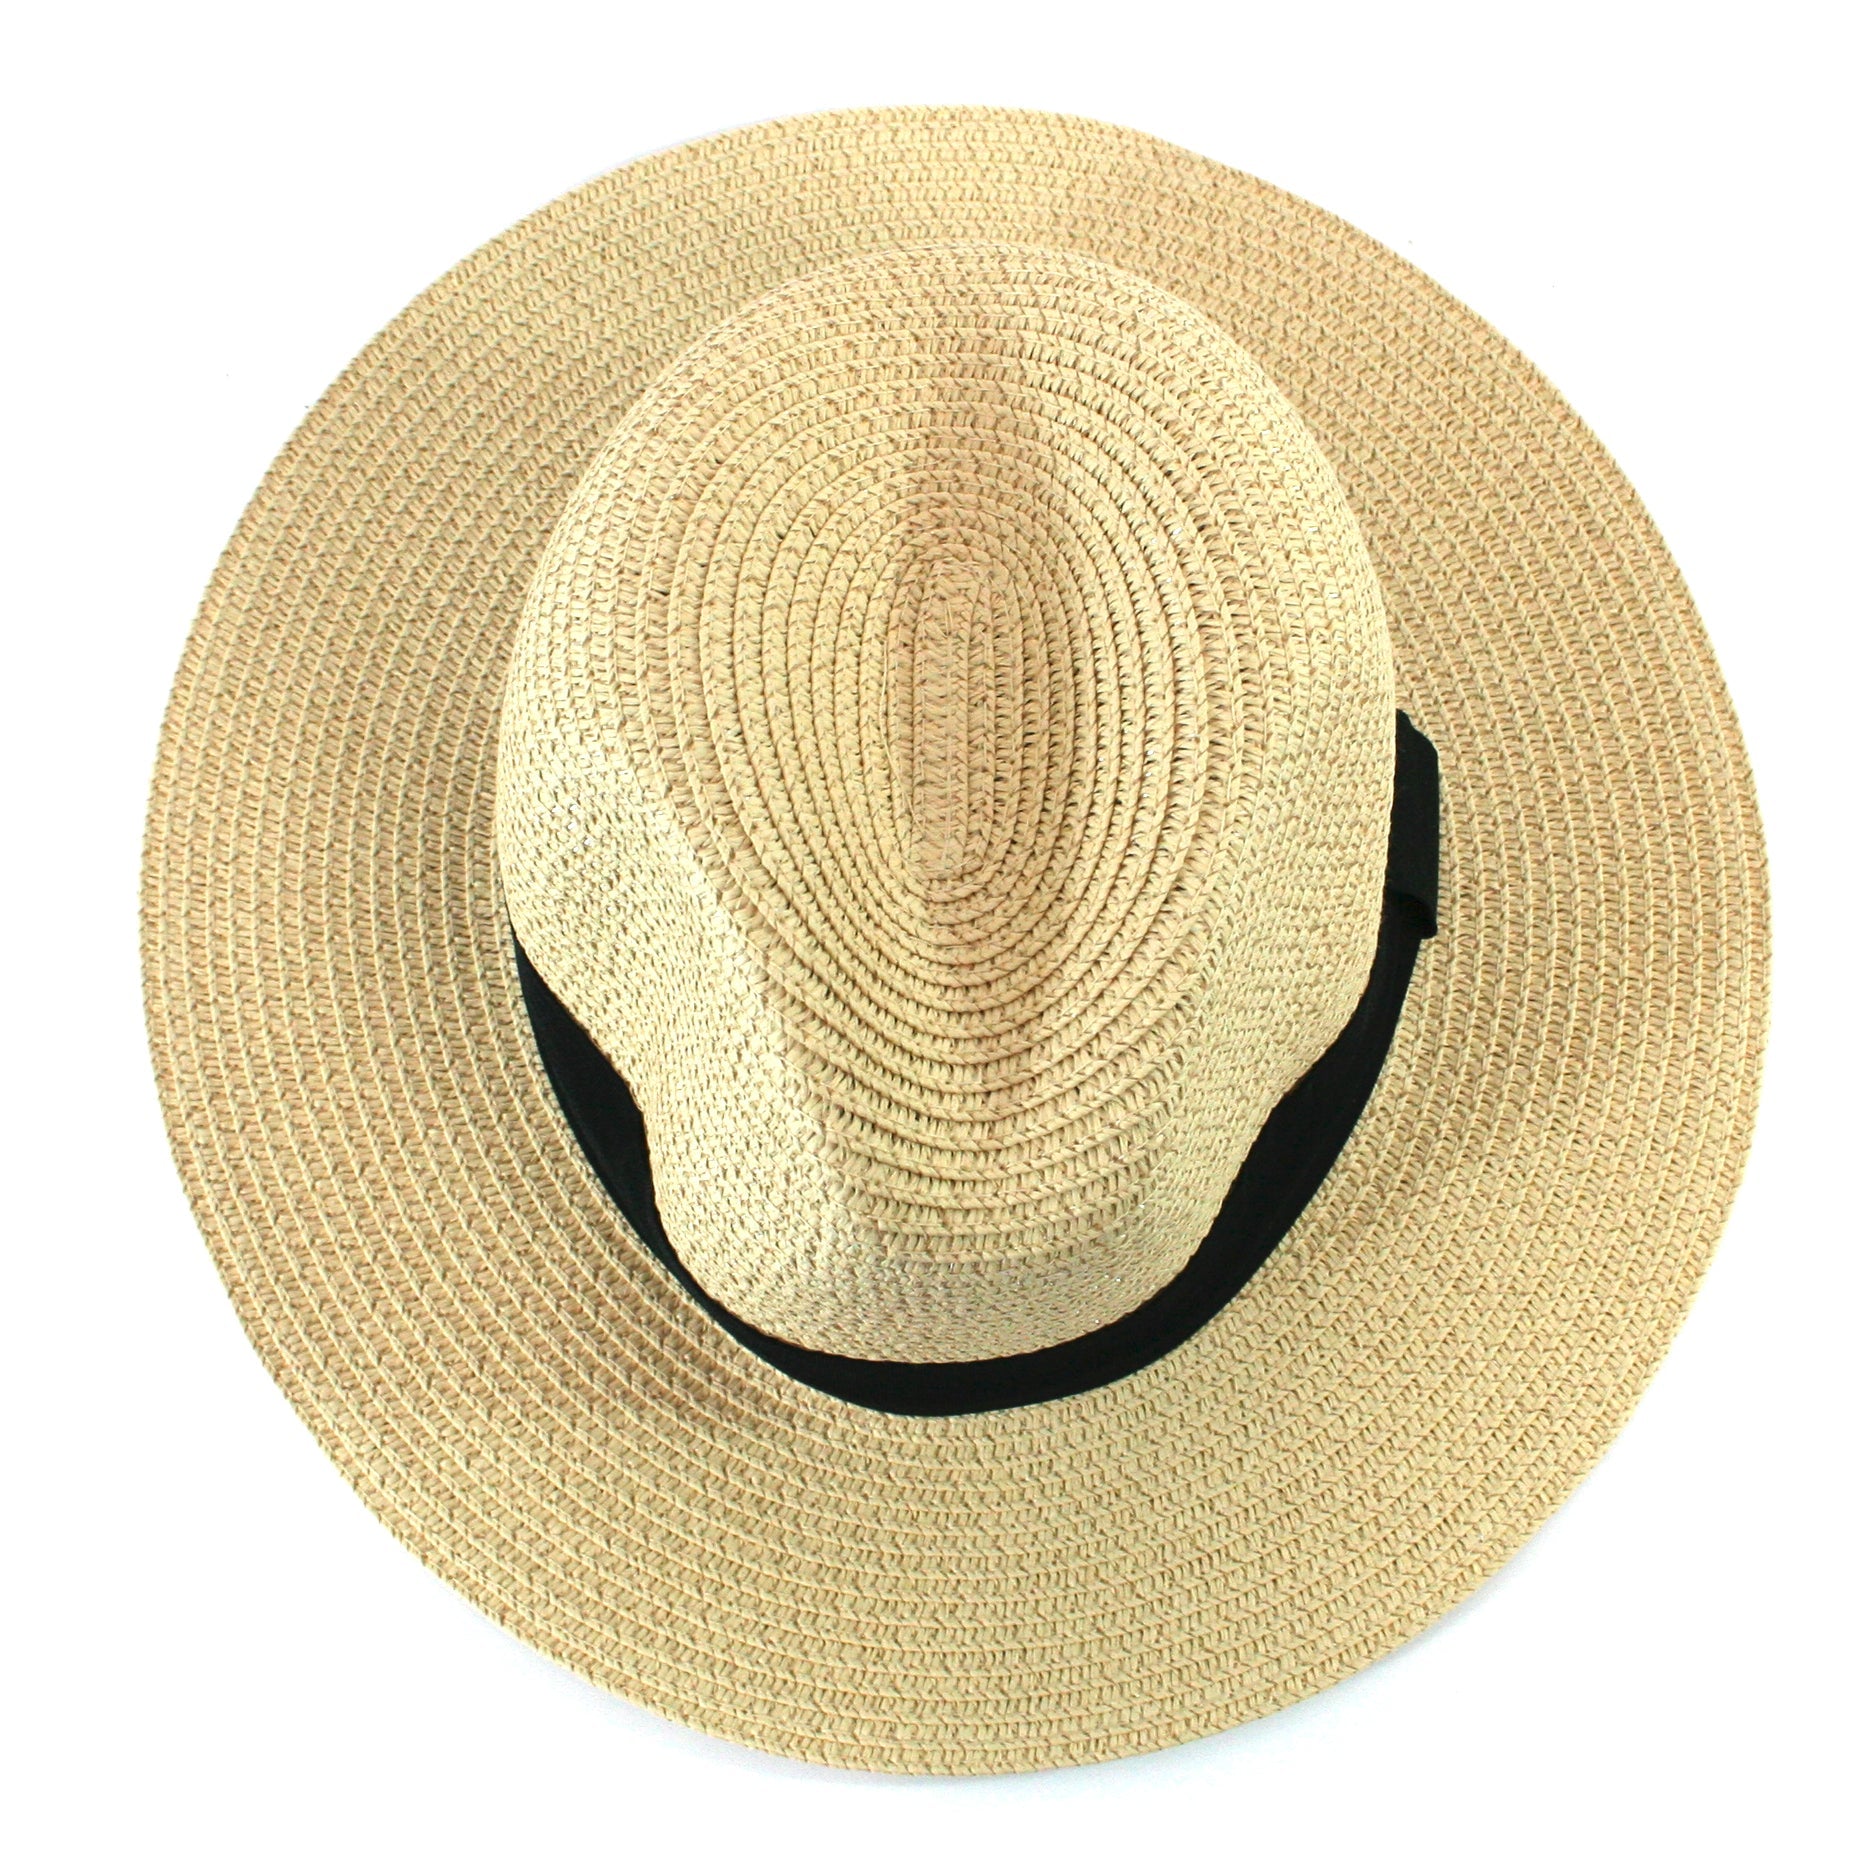 Panama Style Foldable Sun Hat in Bag  - Medium (61cm)